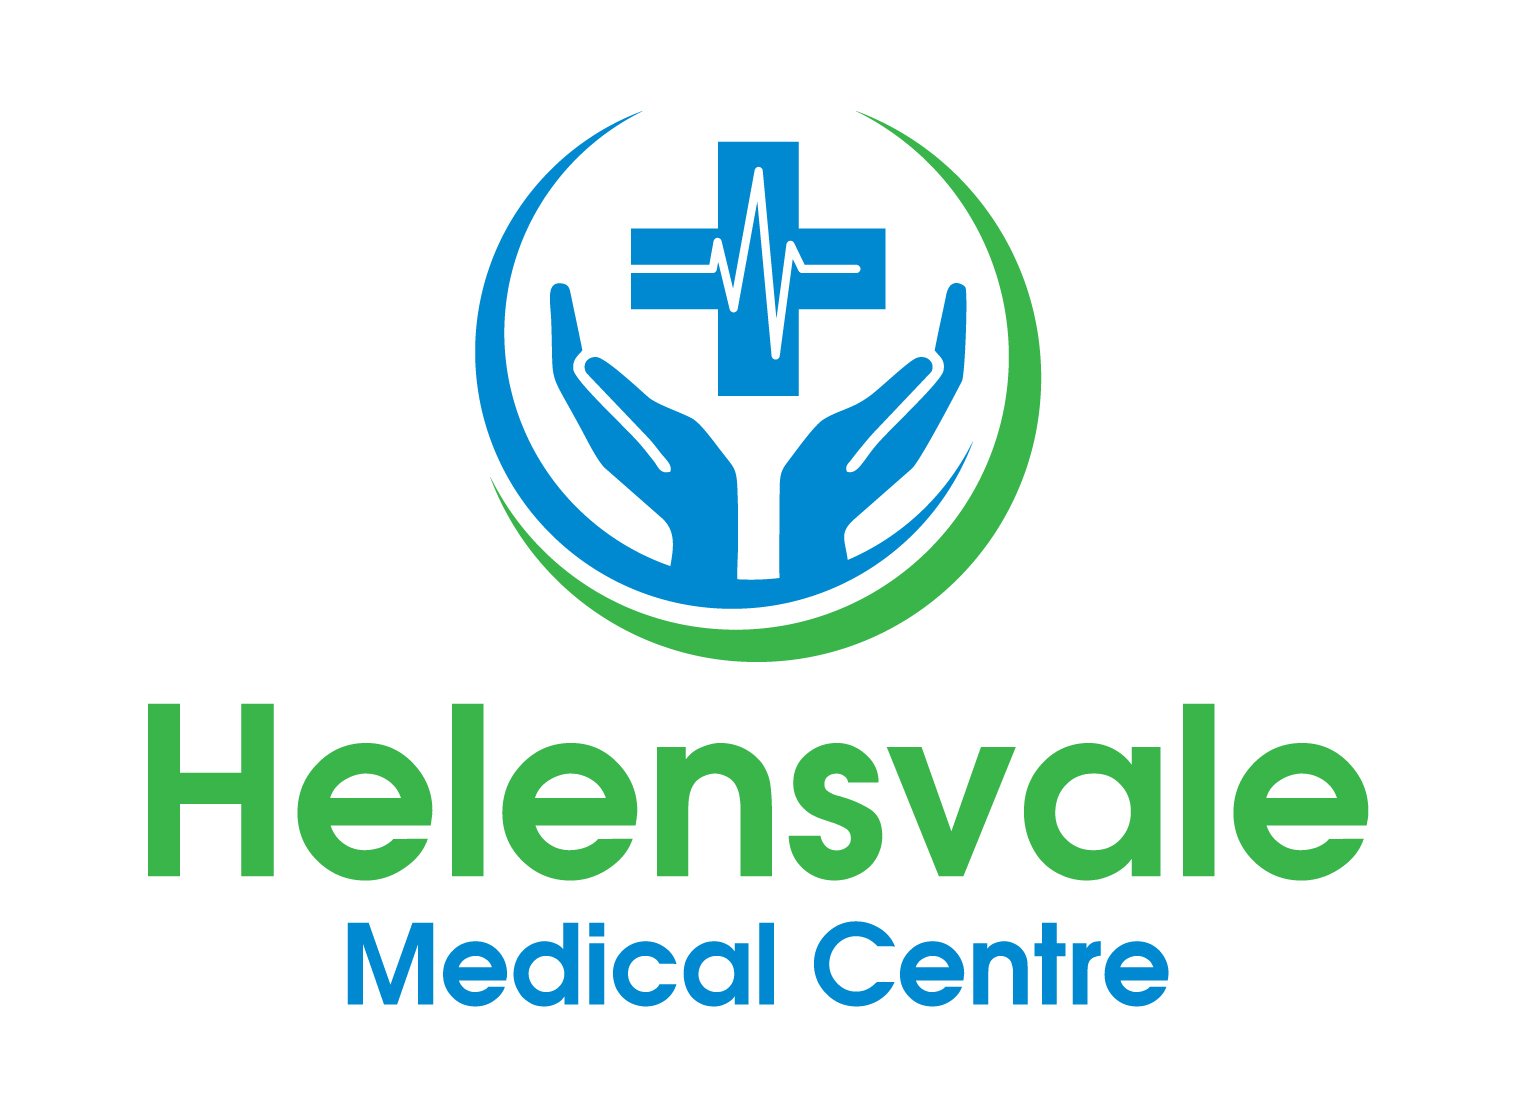 Helensvale Medical Centre